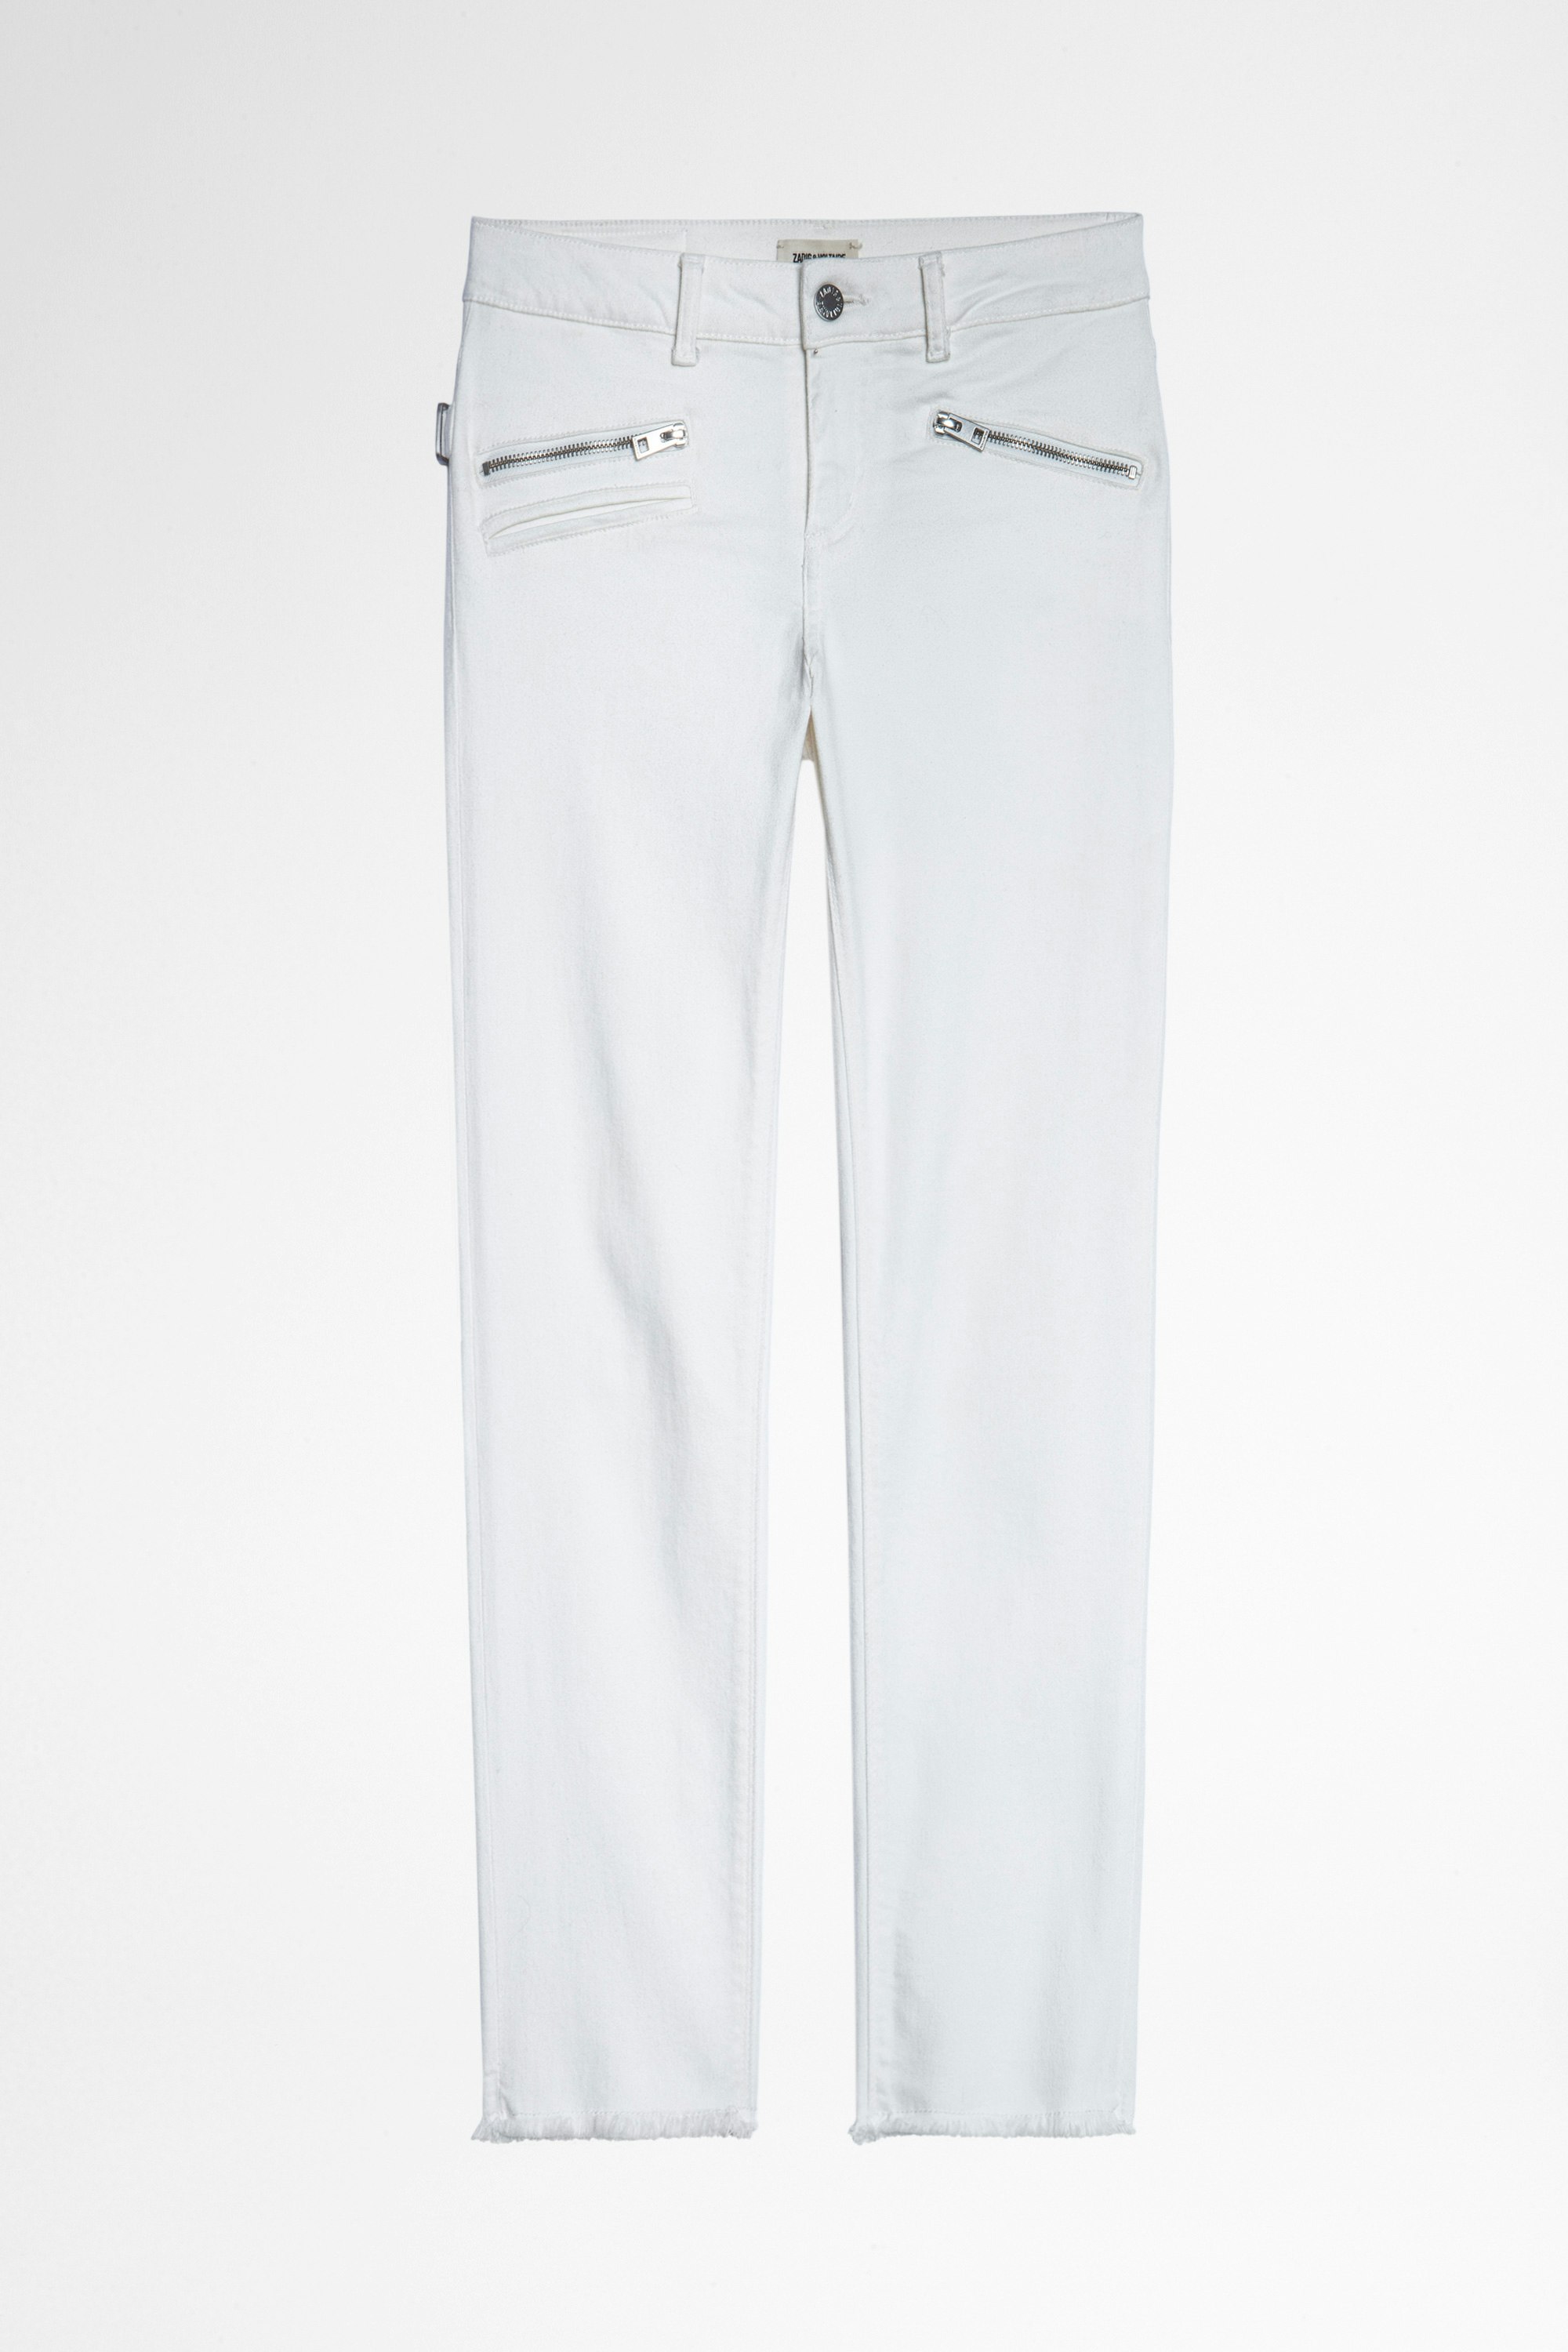 Jeans Ava Jeans stretch taglio slim 